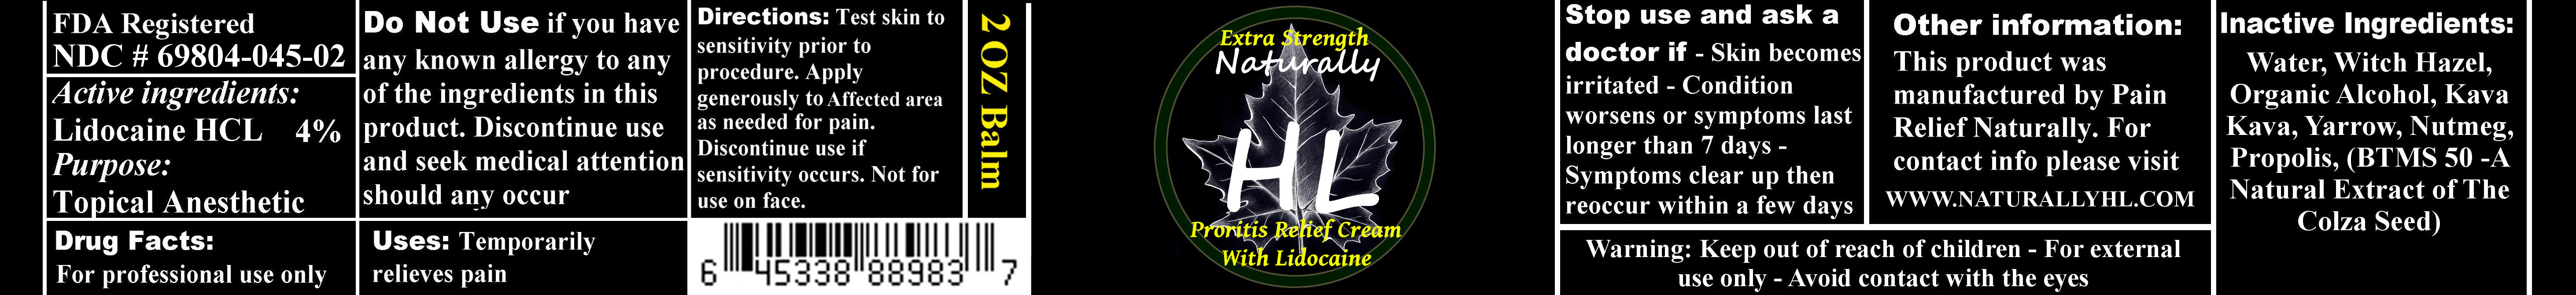 Extra Strength Pruritis Care | Lidocaine Hcl Cream while Breastfeeding